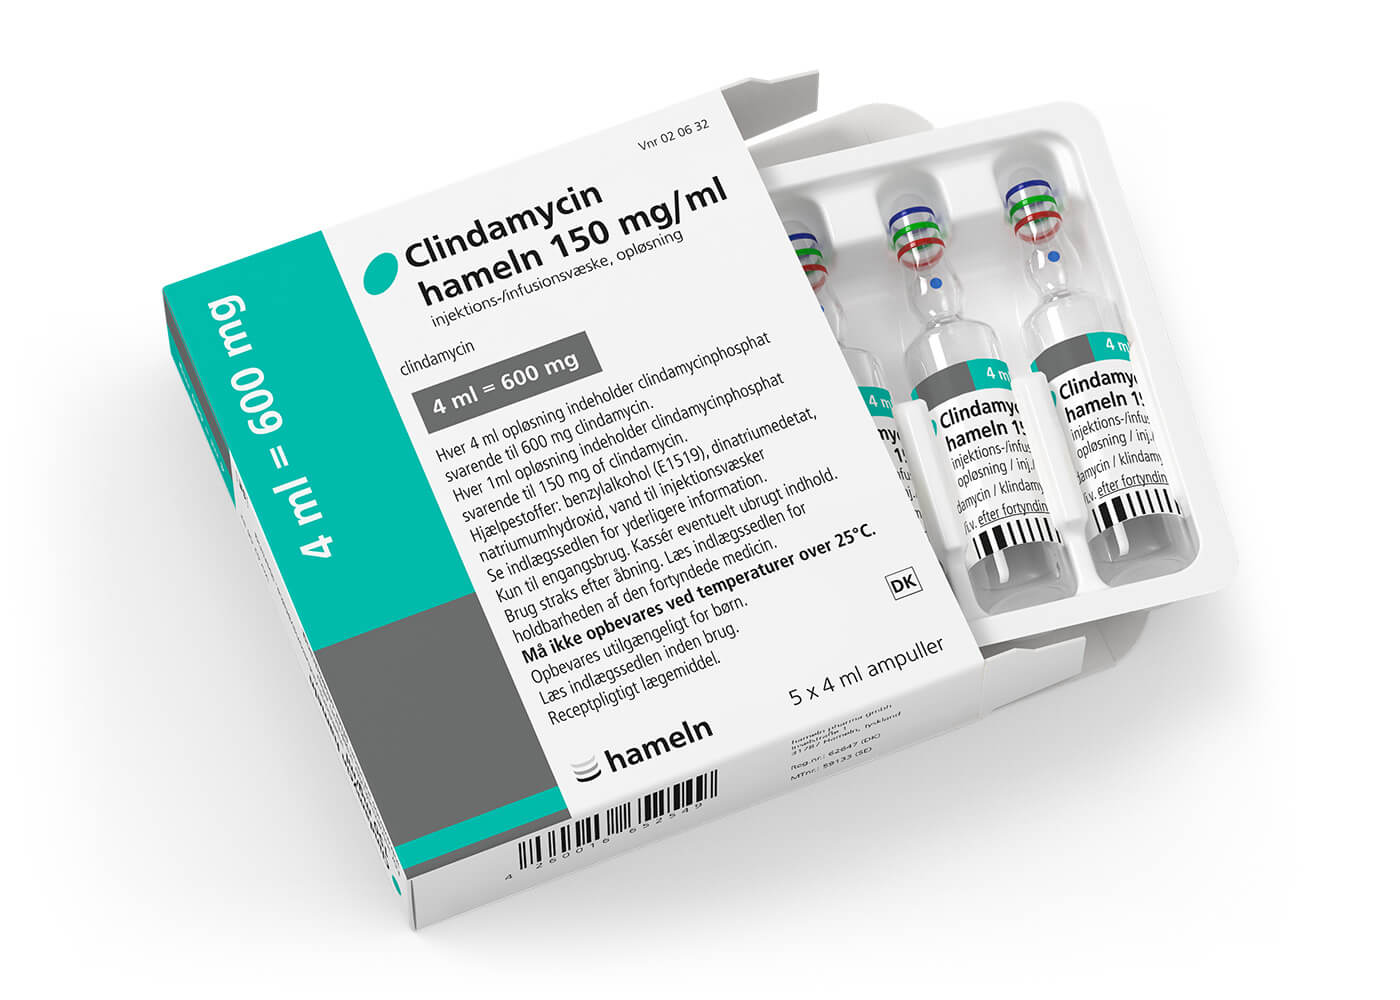 Clindamycin_DK-SE_150_mg-ml_in_4_ml_Pack-Amp_5St_2021-28